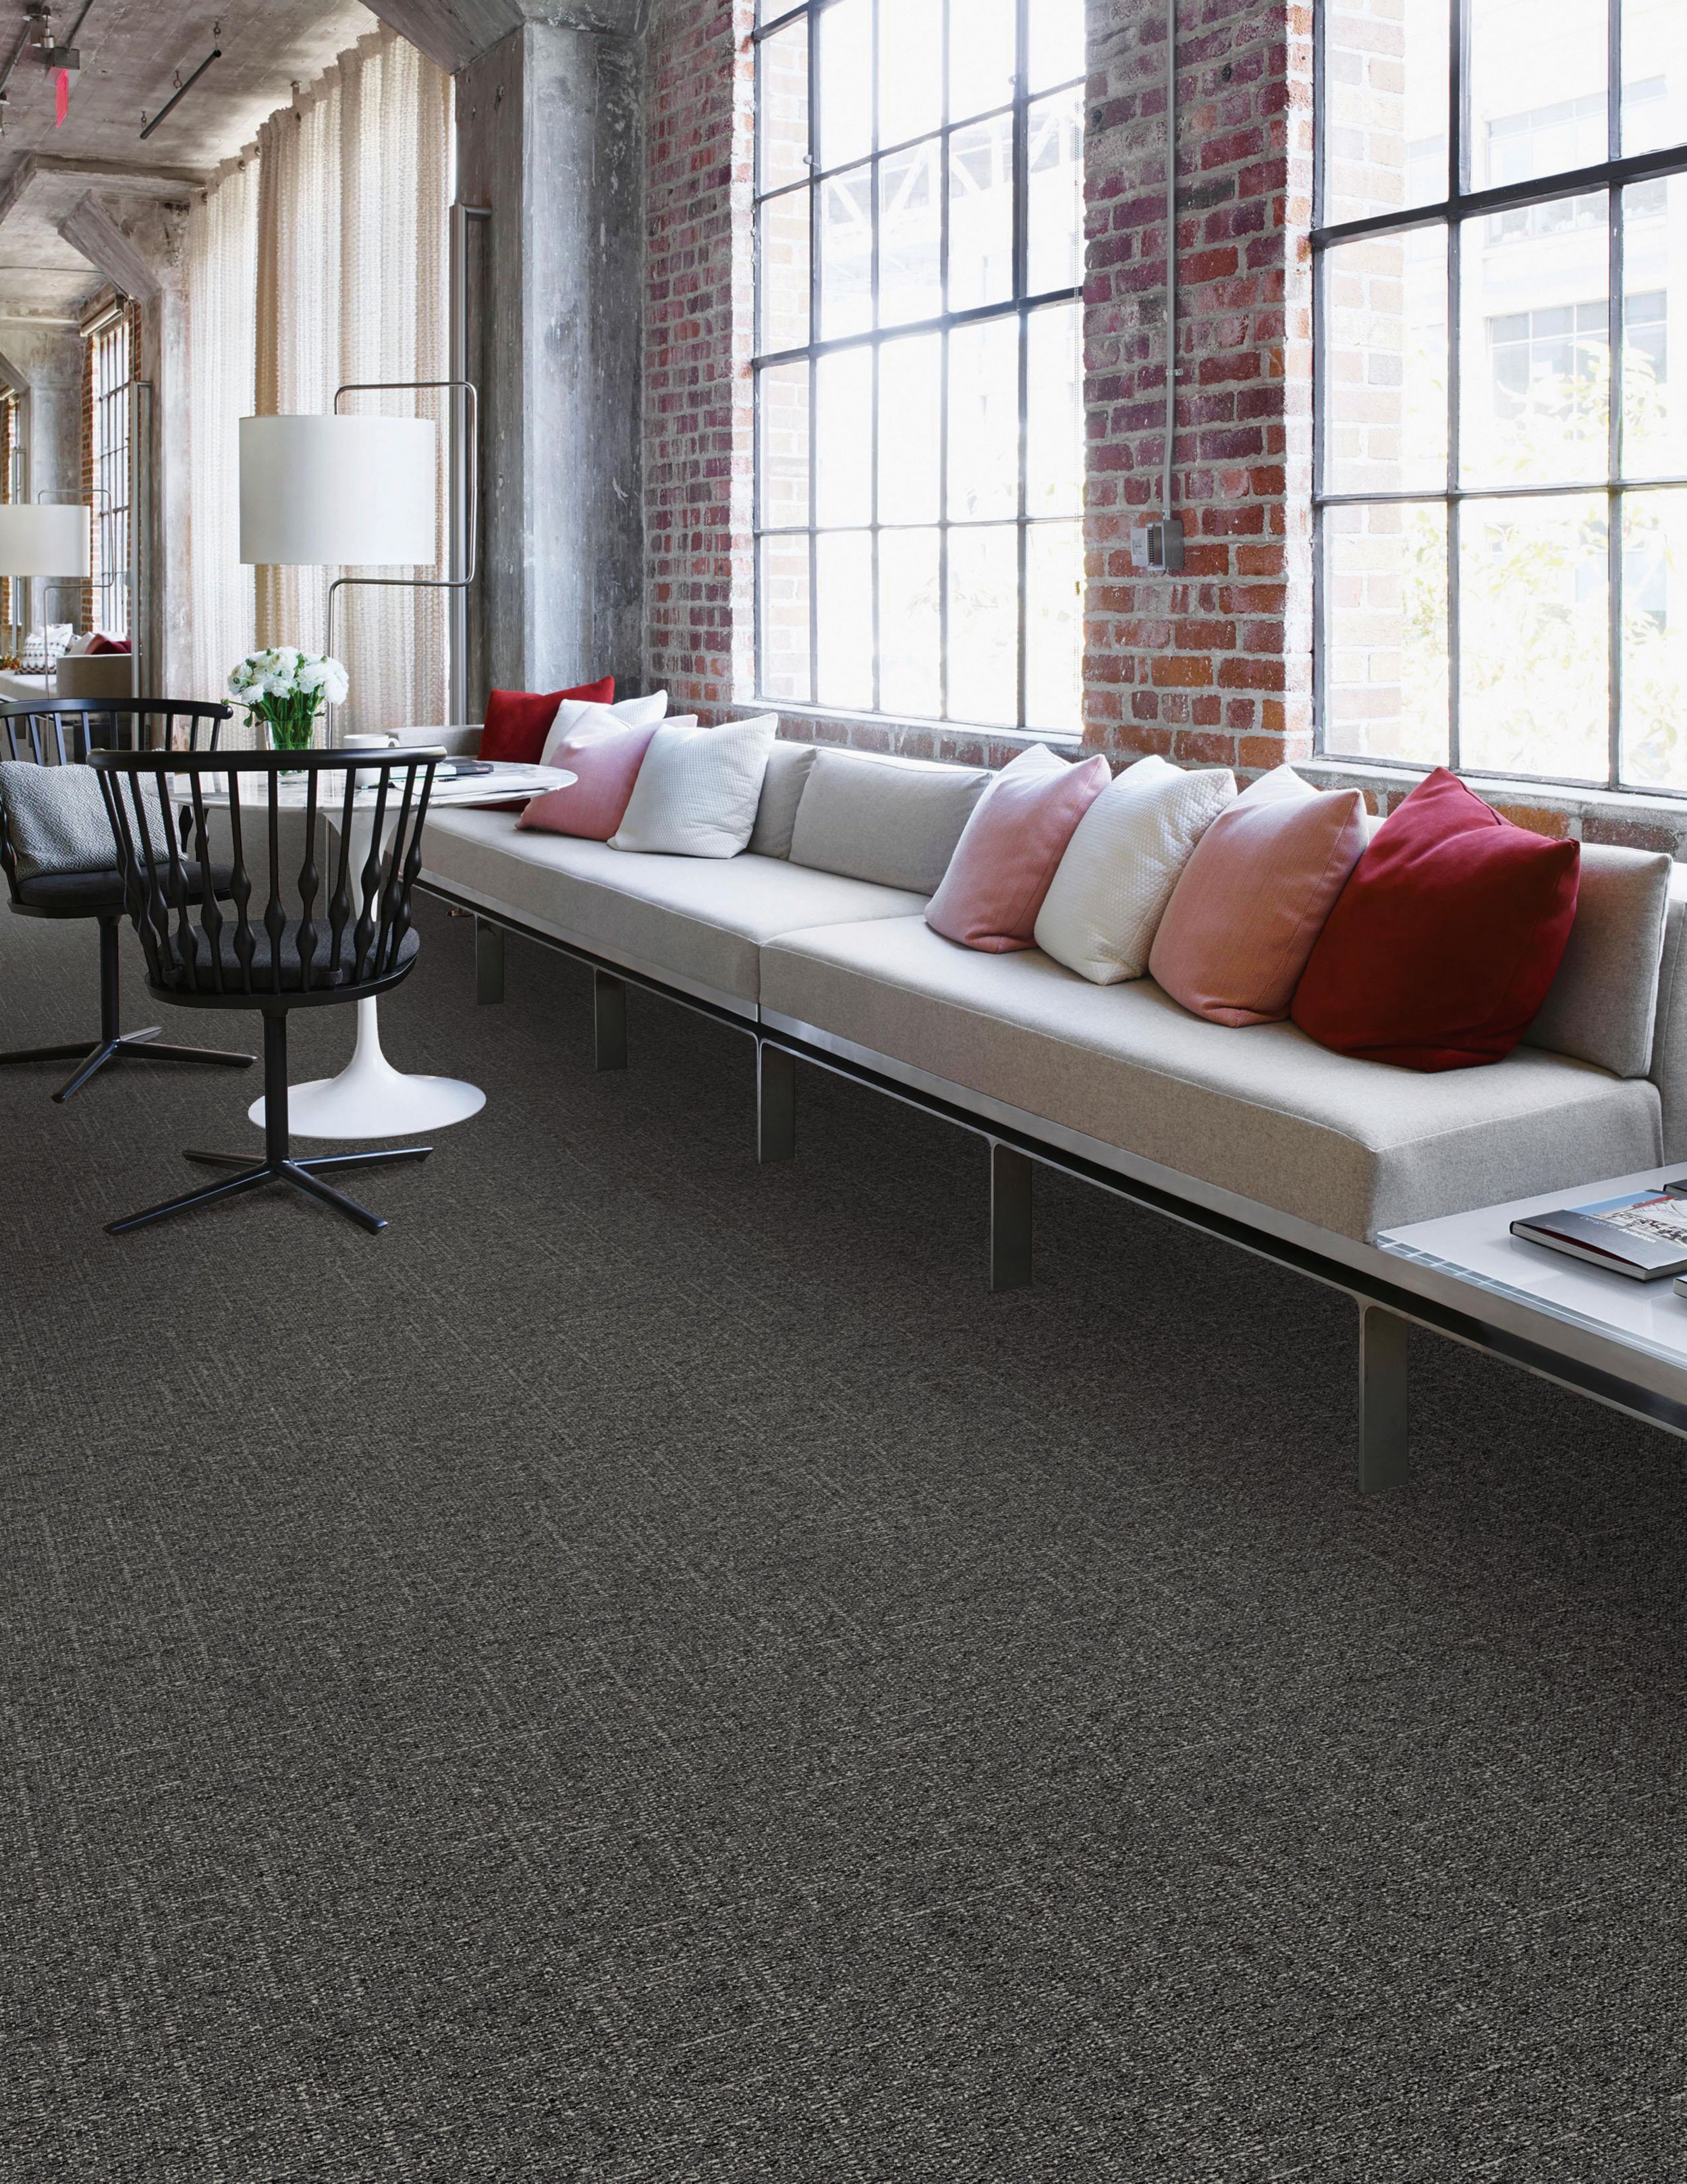 Interface DL902 carpet tile in public space with long couch imagen número 1